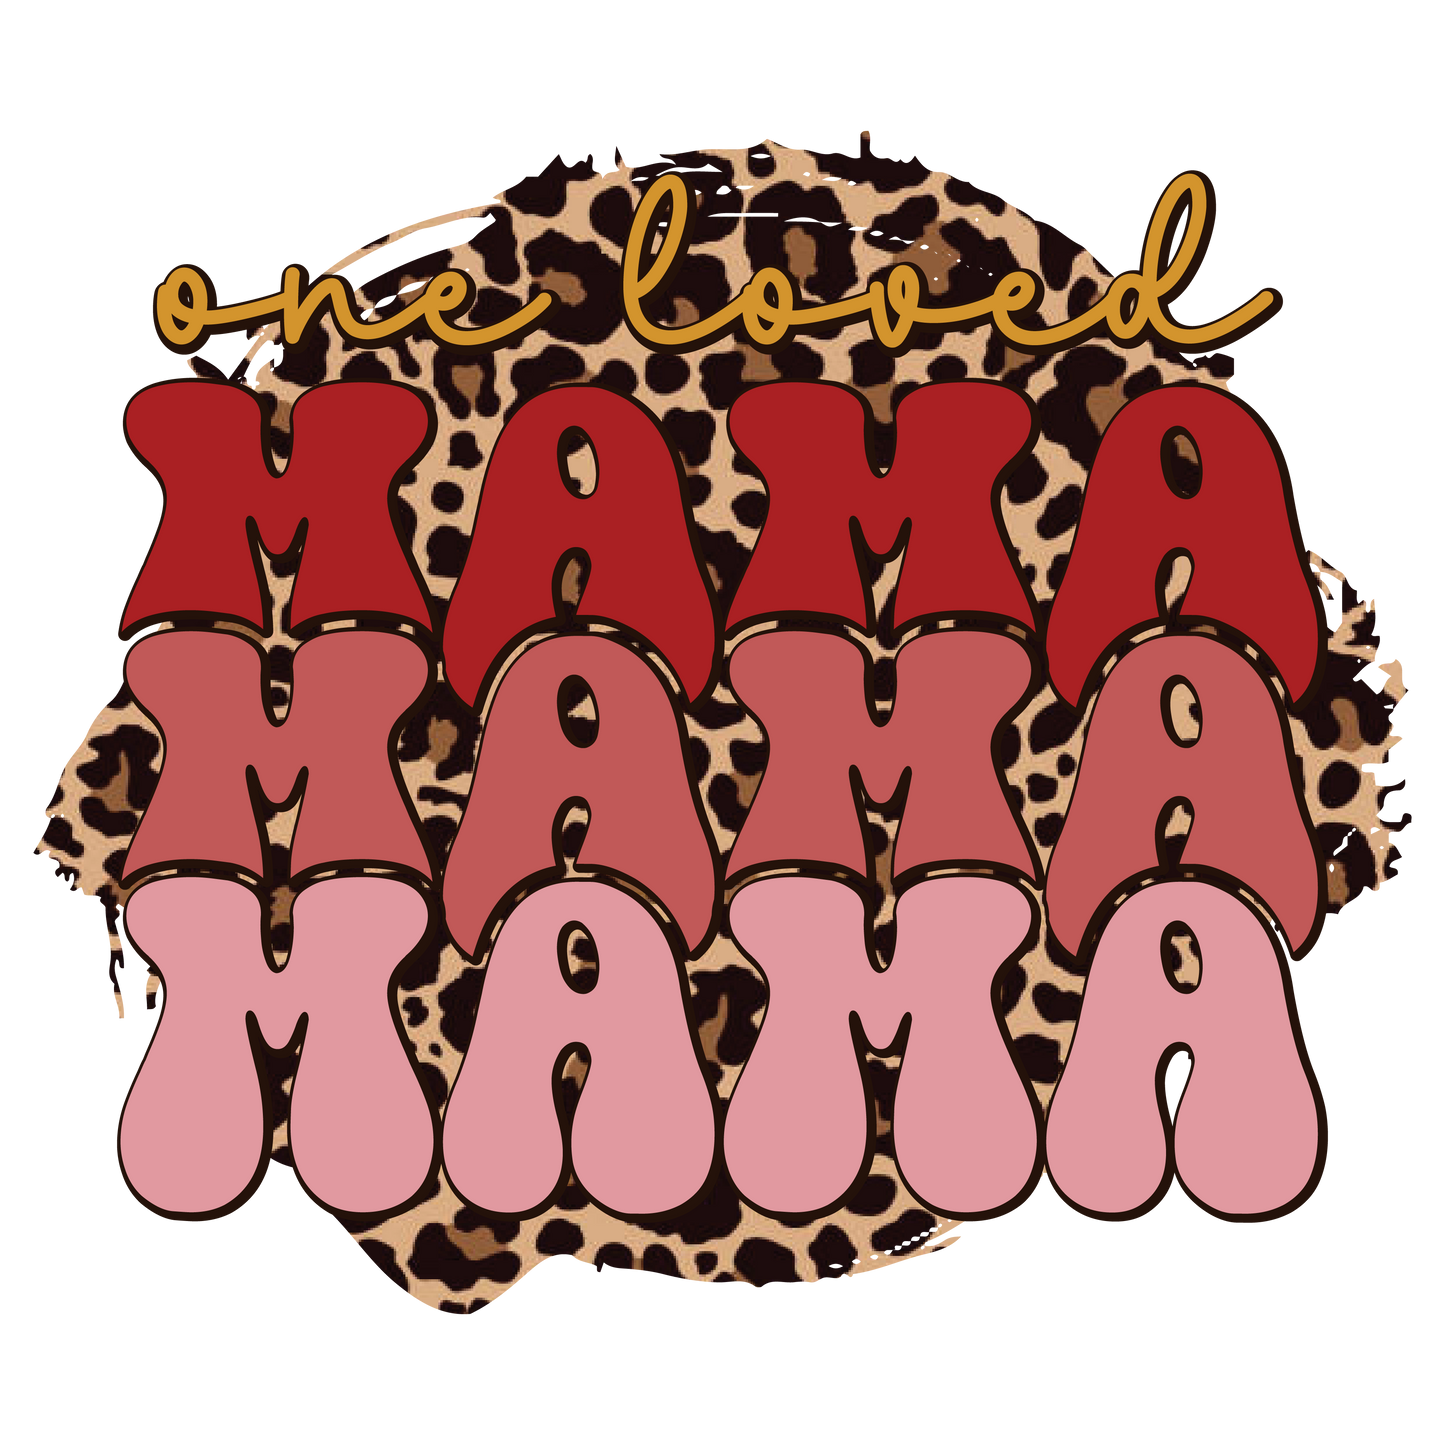 One Loved Mama Valentine Design Transfer